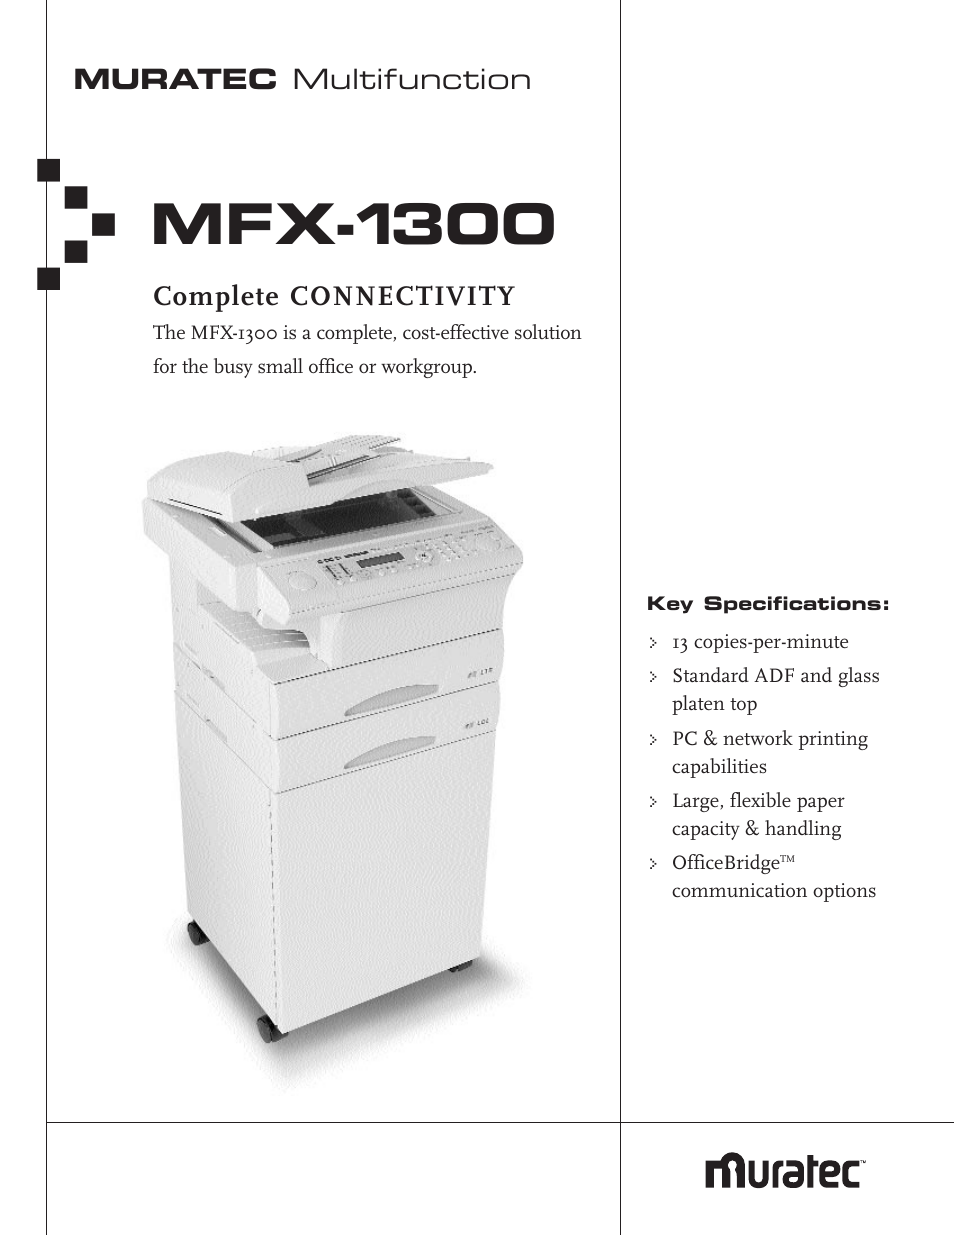 MFX-1300